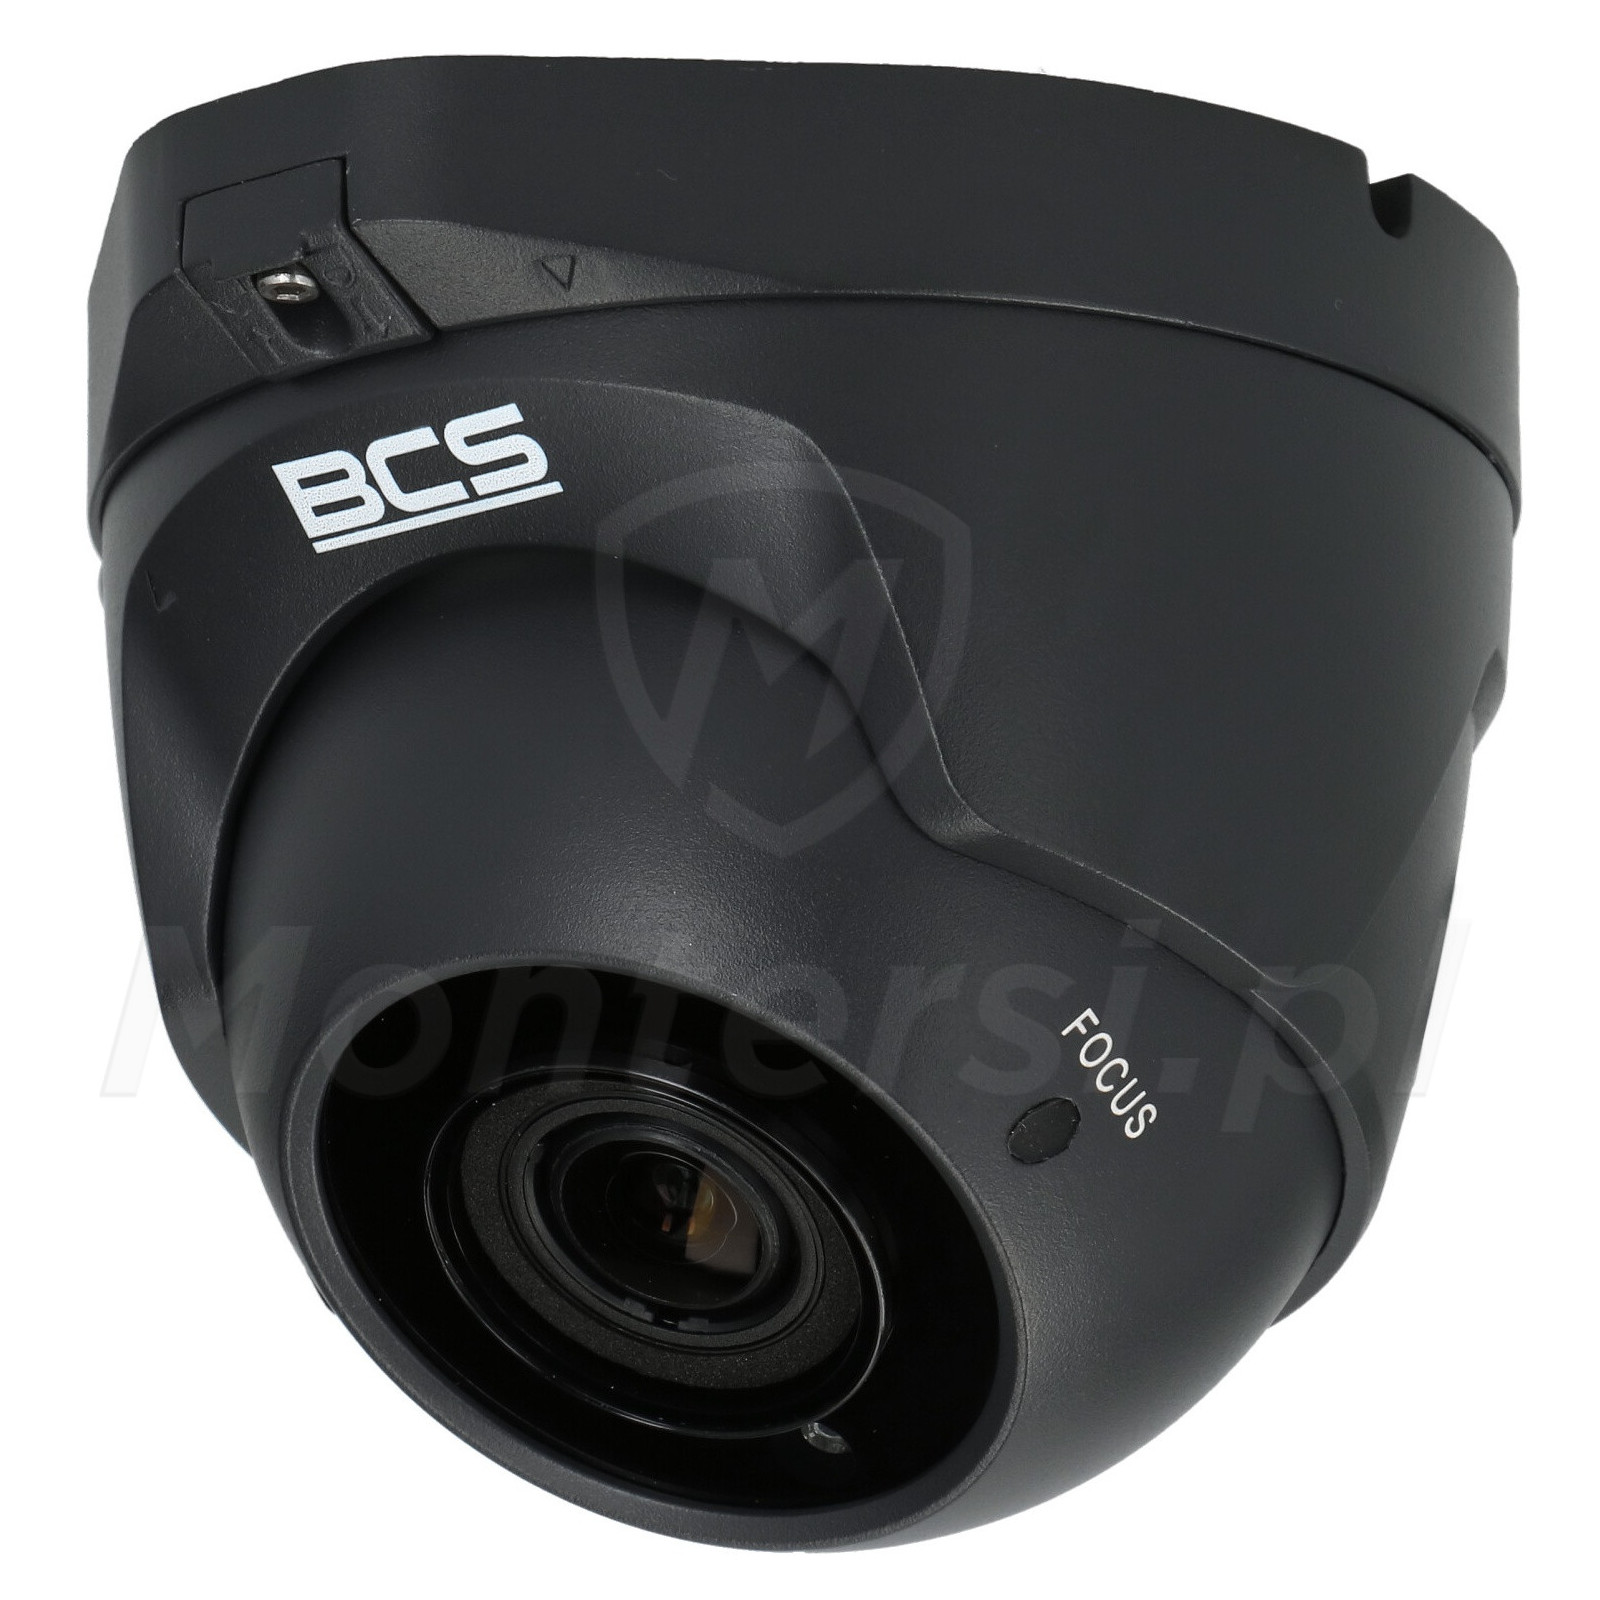 BCS-EA45VR4-G(H1) - Kopułkowa kamera 4 w 1, 5 Mpx, MOTOZOOM